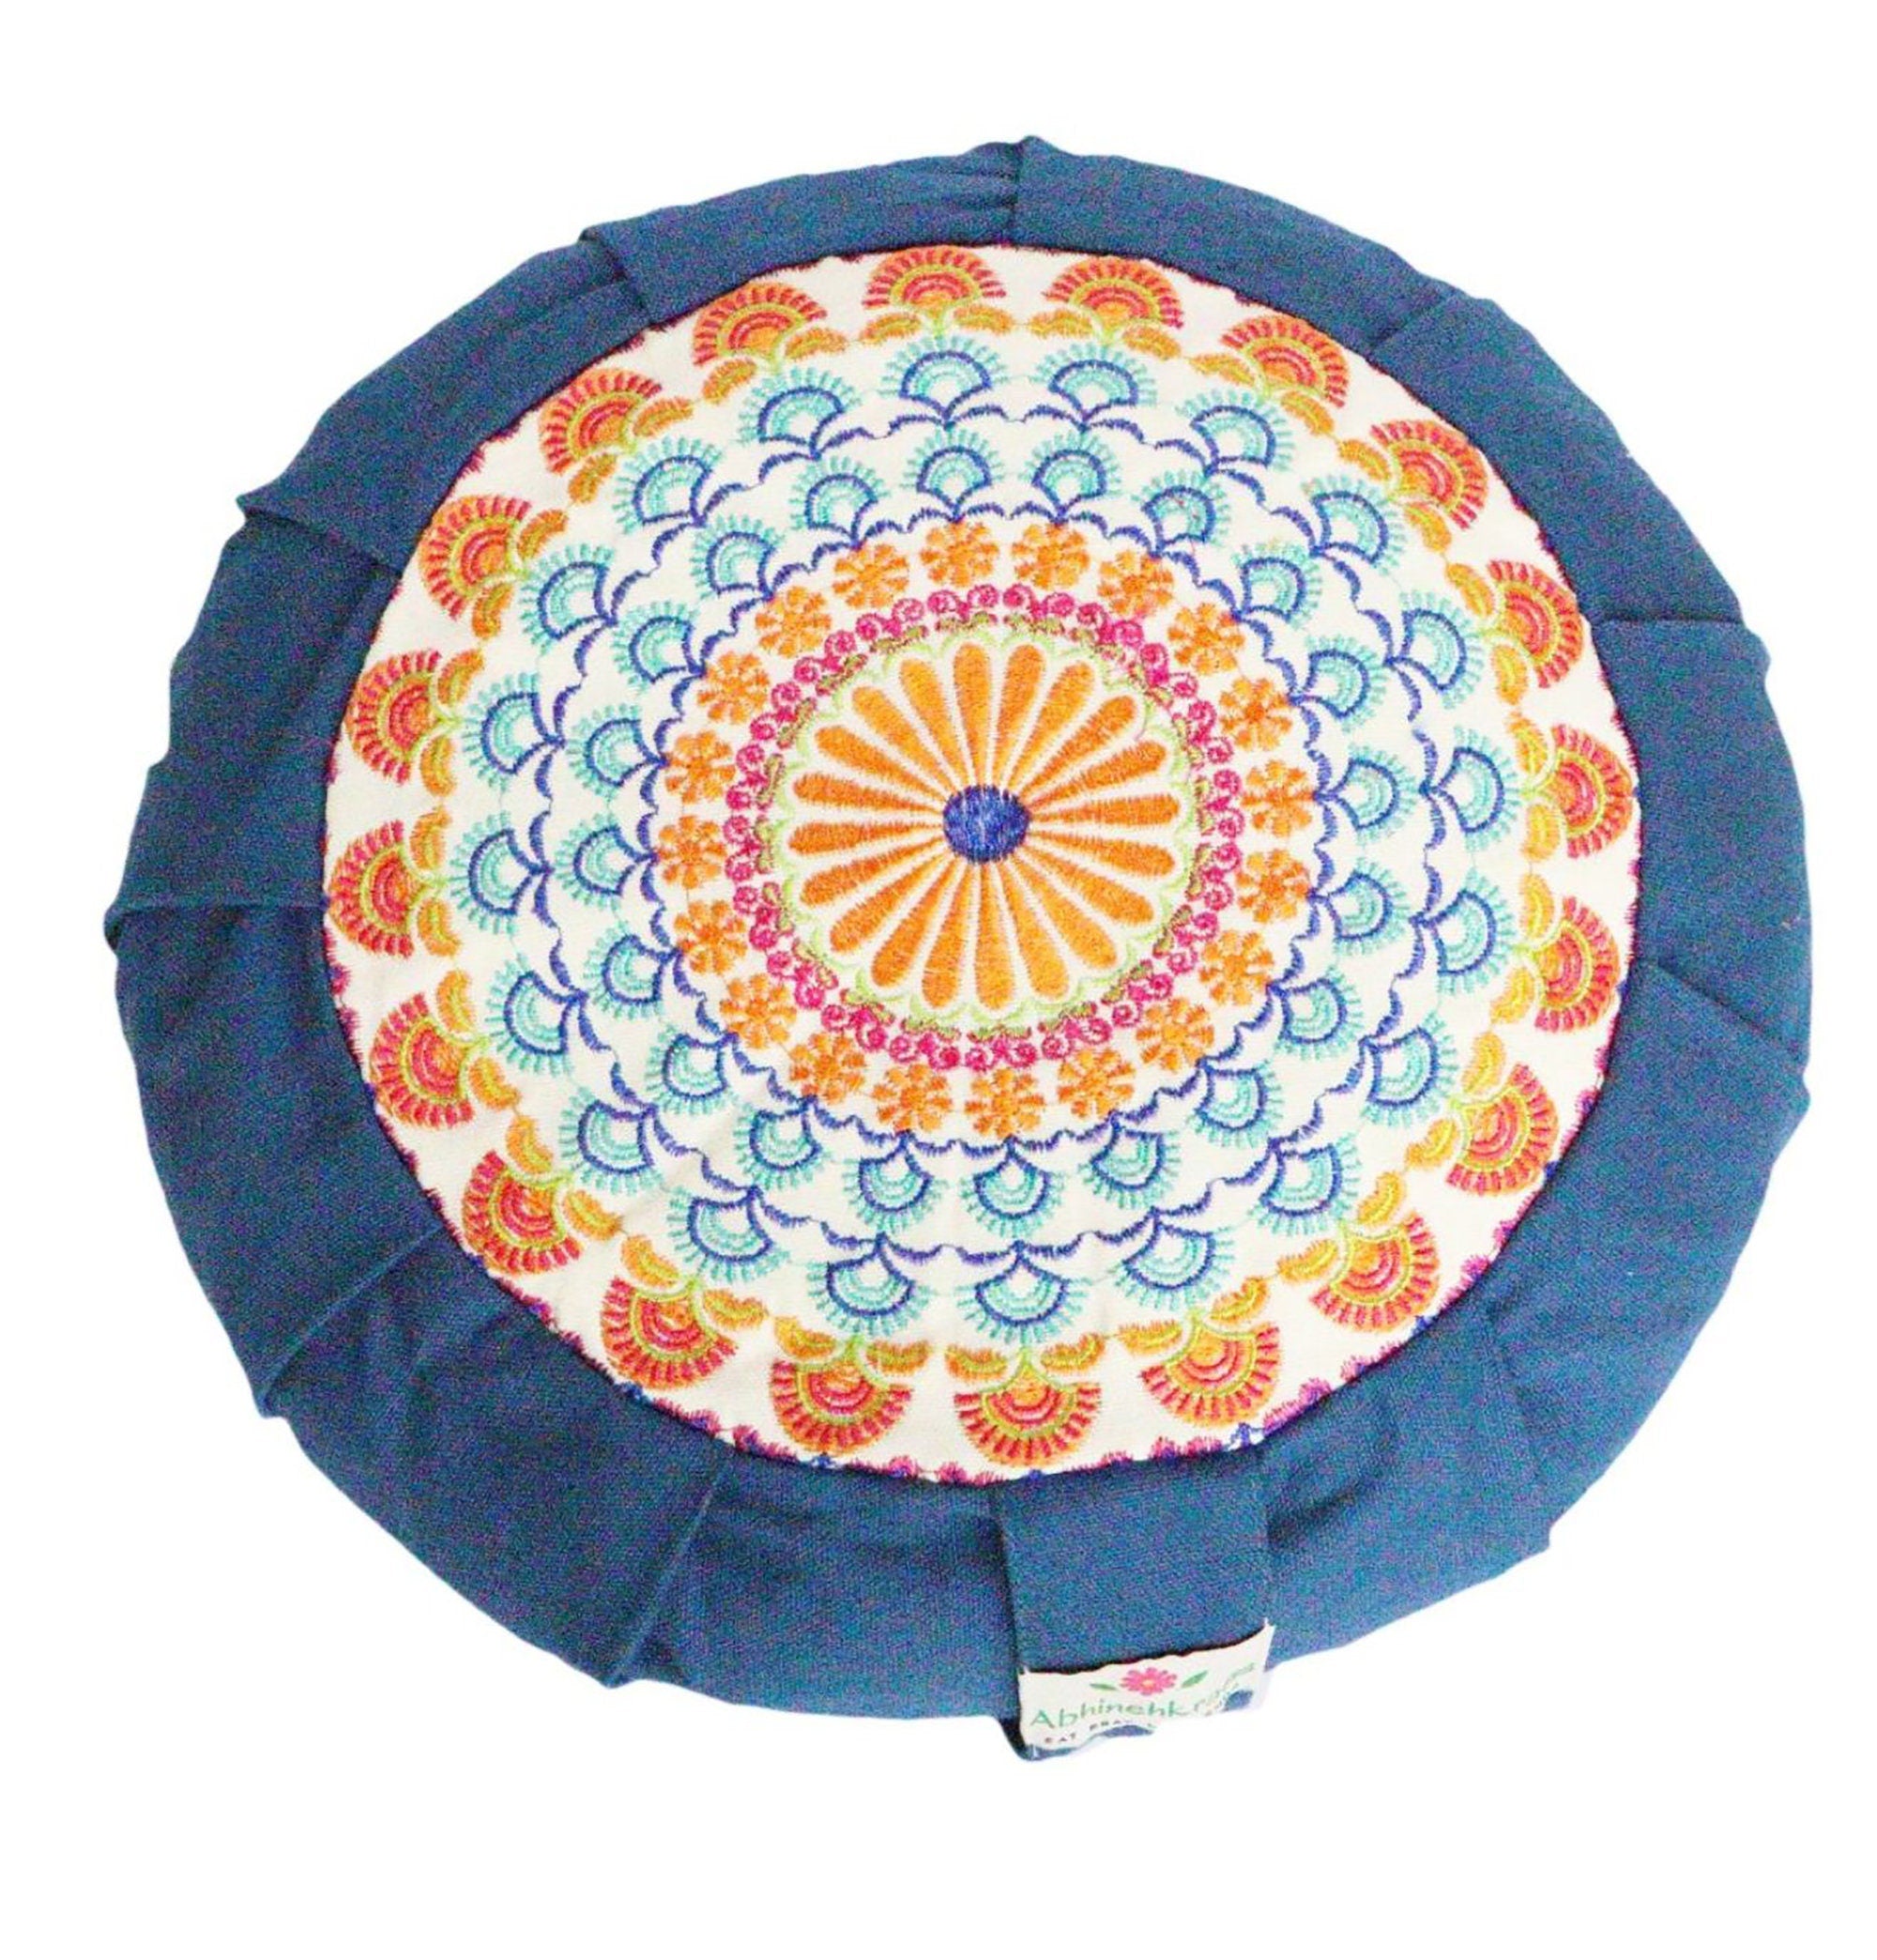 Embroidered Round Portable Meditation Cushion, Zafu Yoga Pillow - Peri -  YogaKargha